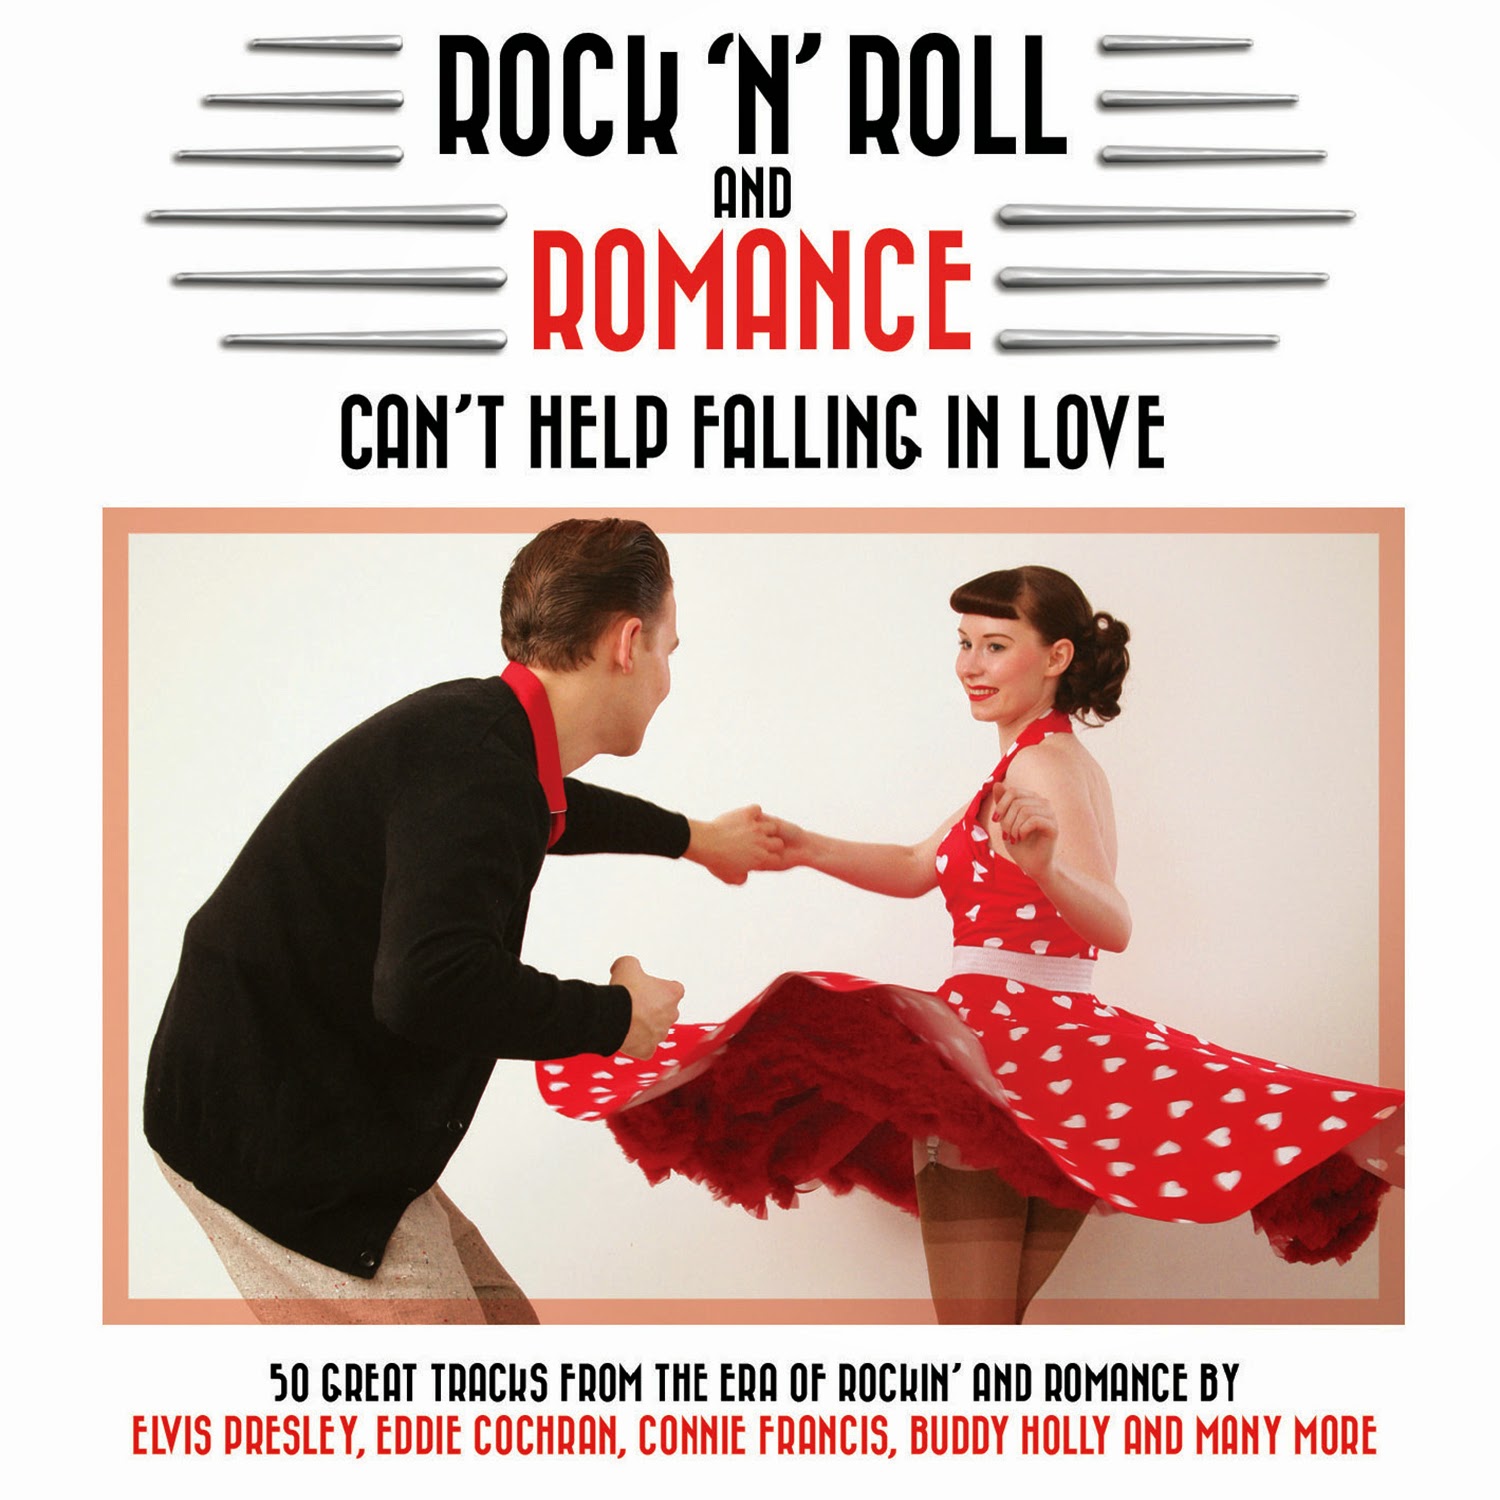 Delta Digital Media: Rock 'N' Roll and Romance-Can't Help Falling In Love